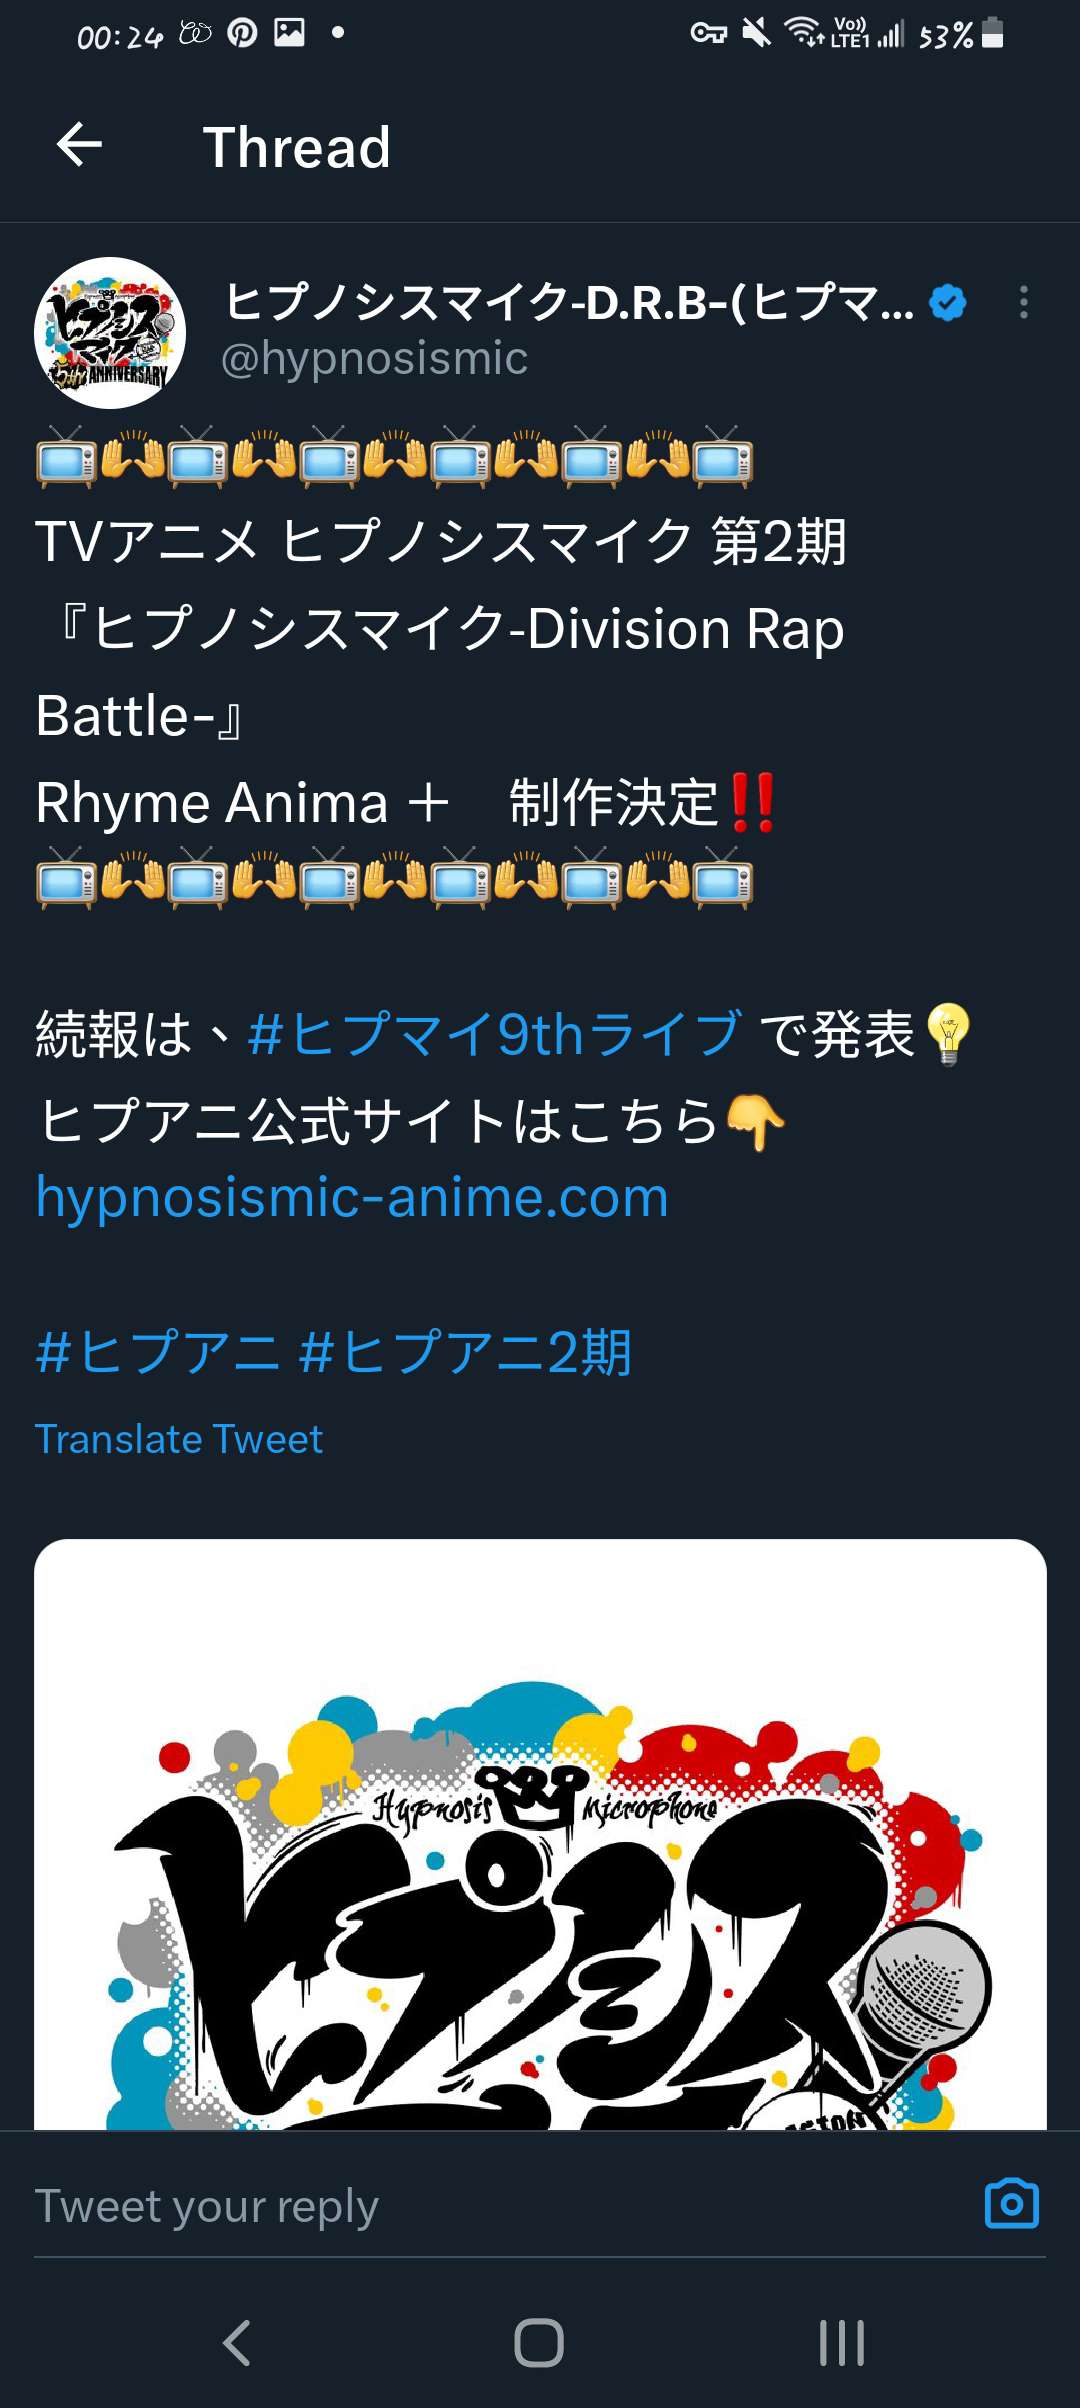 HYPNOSISMIC -Division Rap Battle- Rhyme Anima PLUS Anime Releases